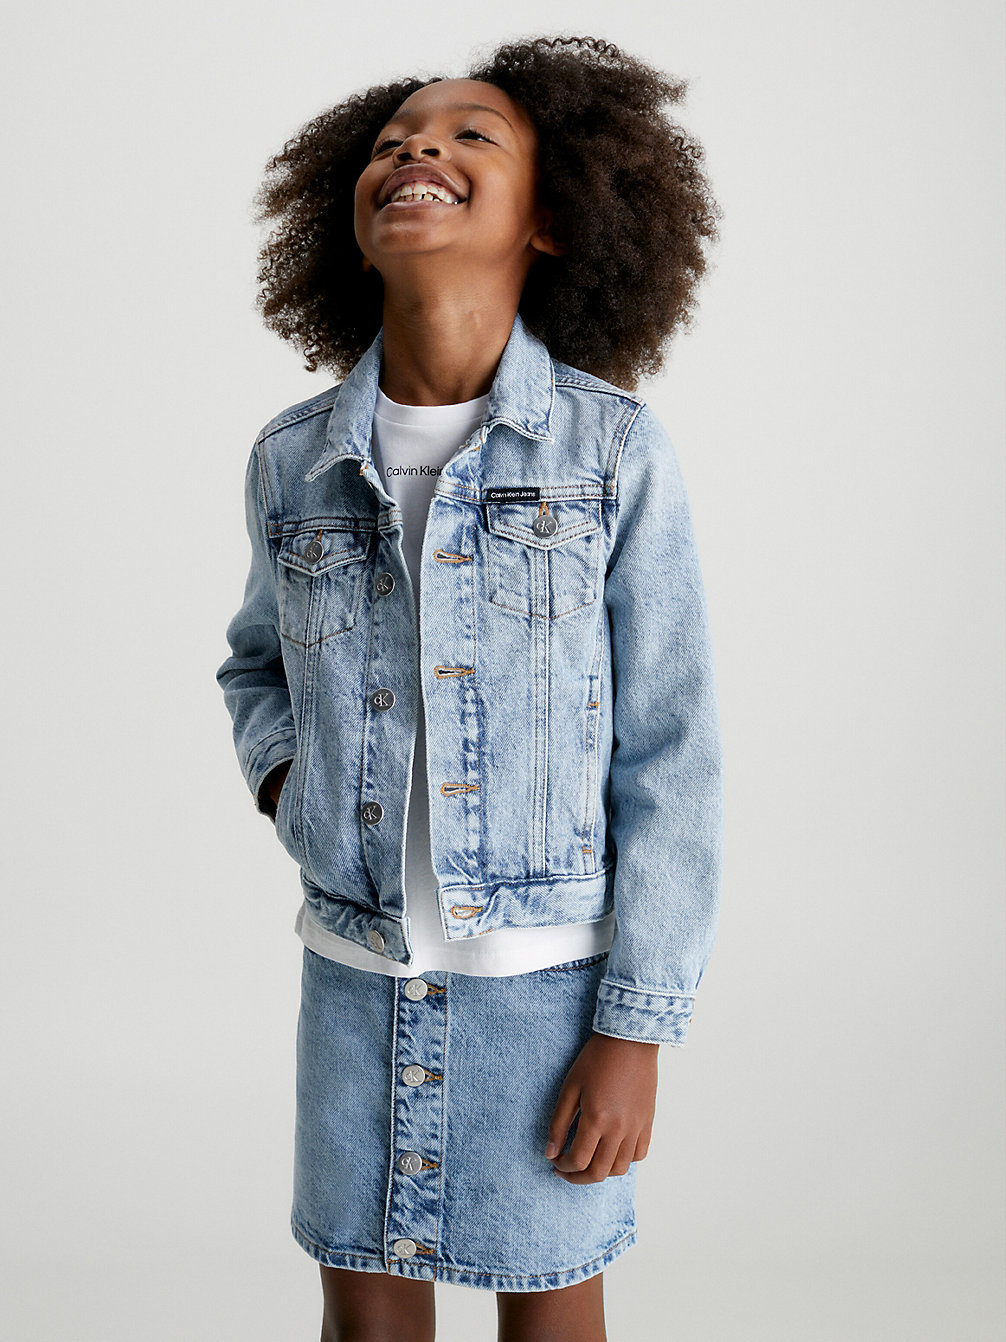 SALT PEPPER LIGHT Denim Jacket undefined girls Calvin Klein